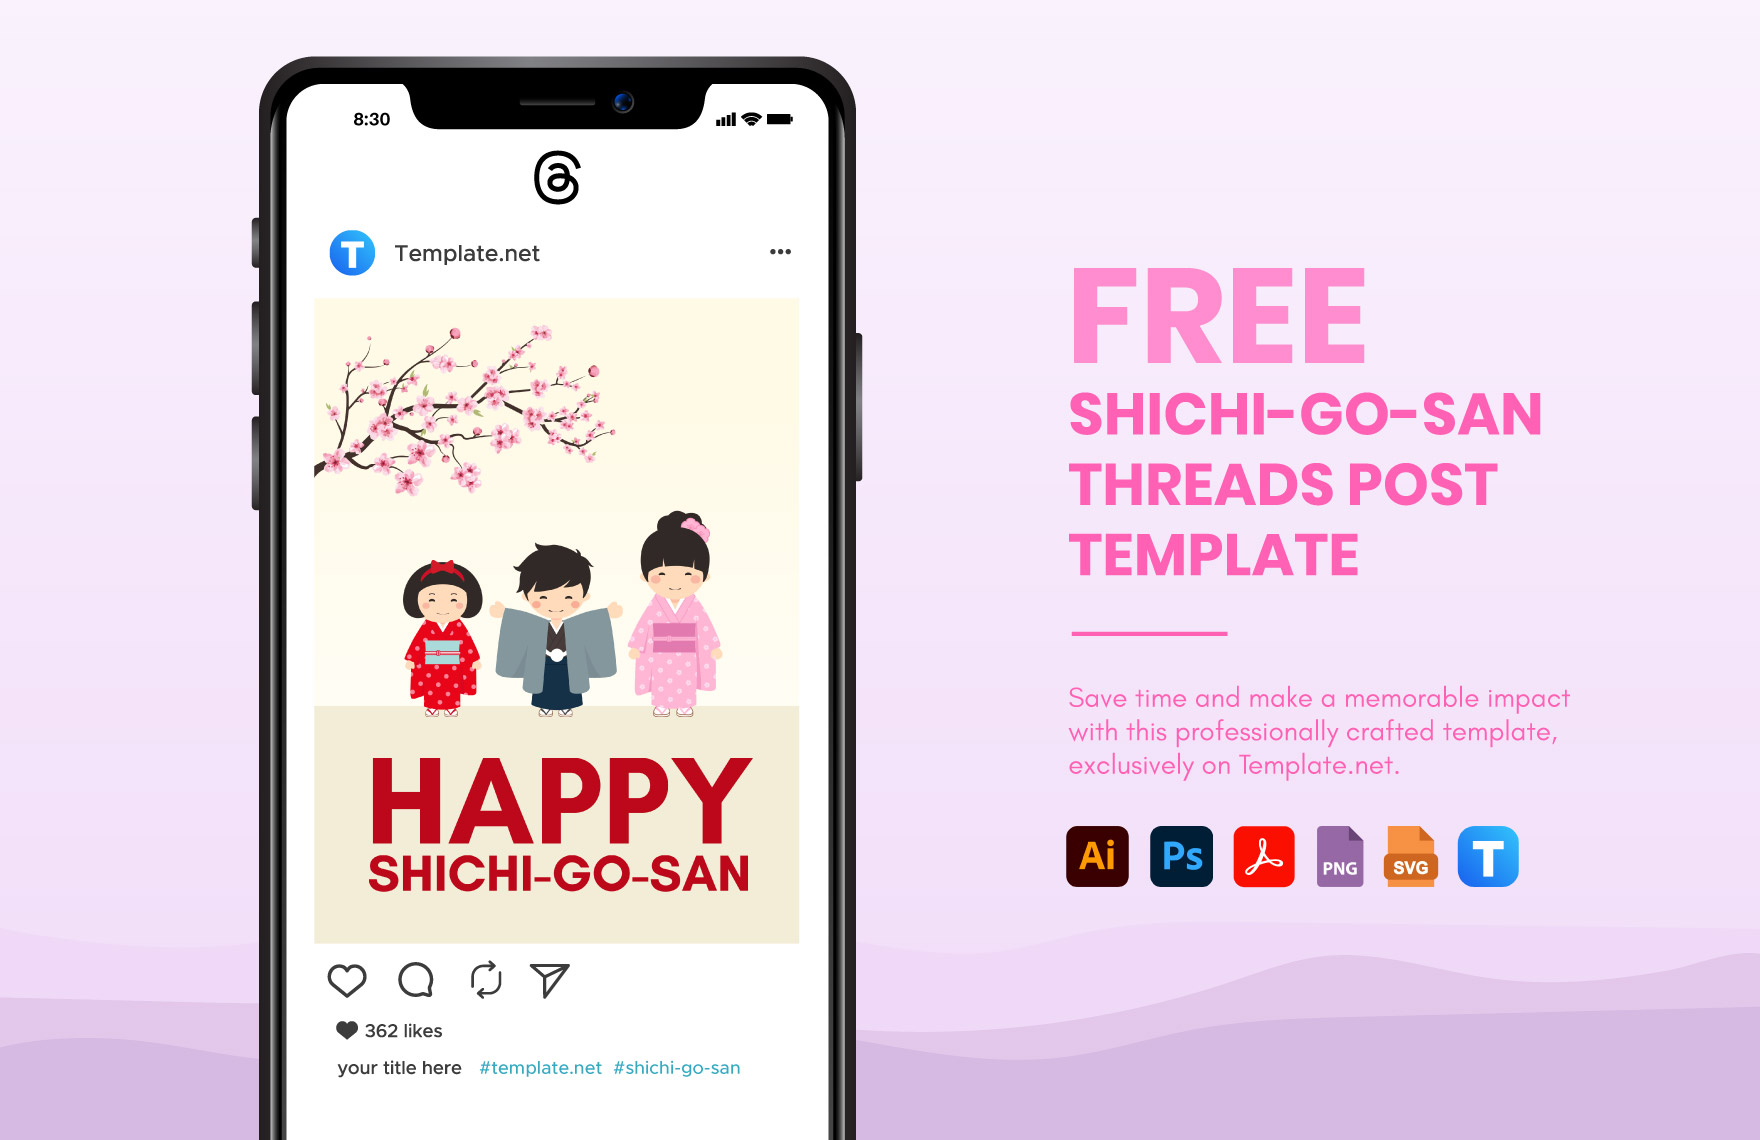 Shichi-Go-San Threads Post Template